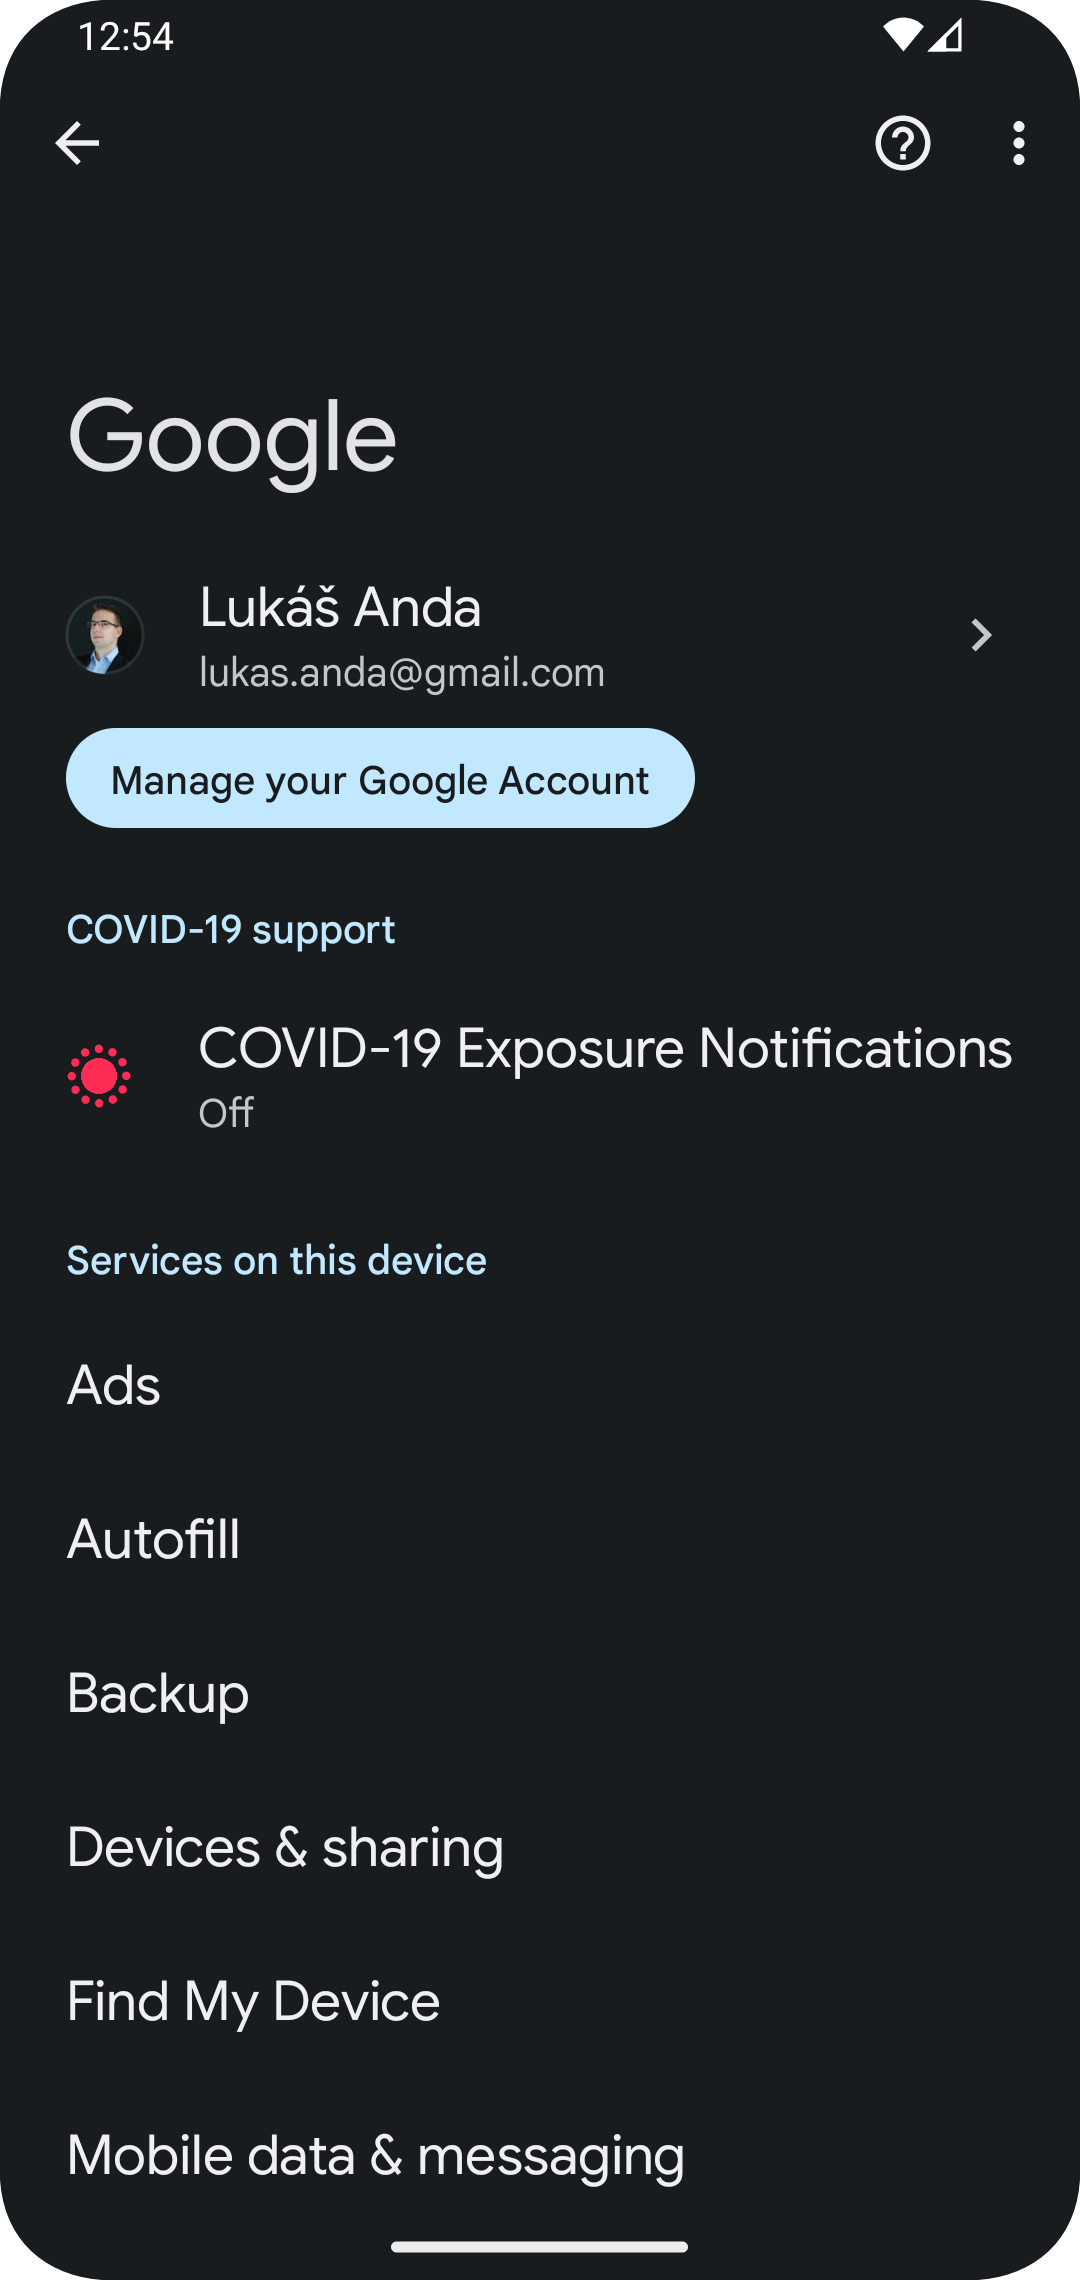 Google settings on a device